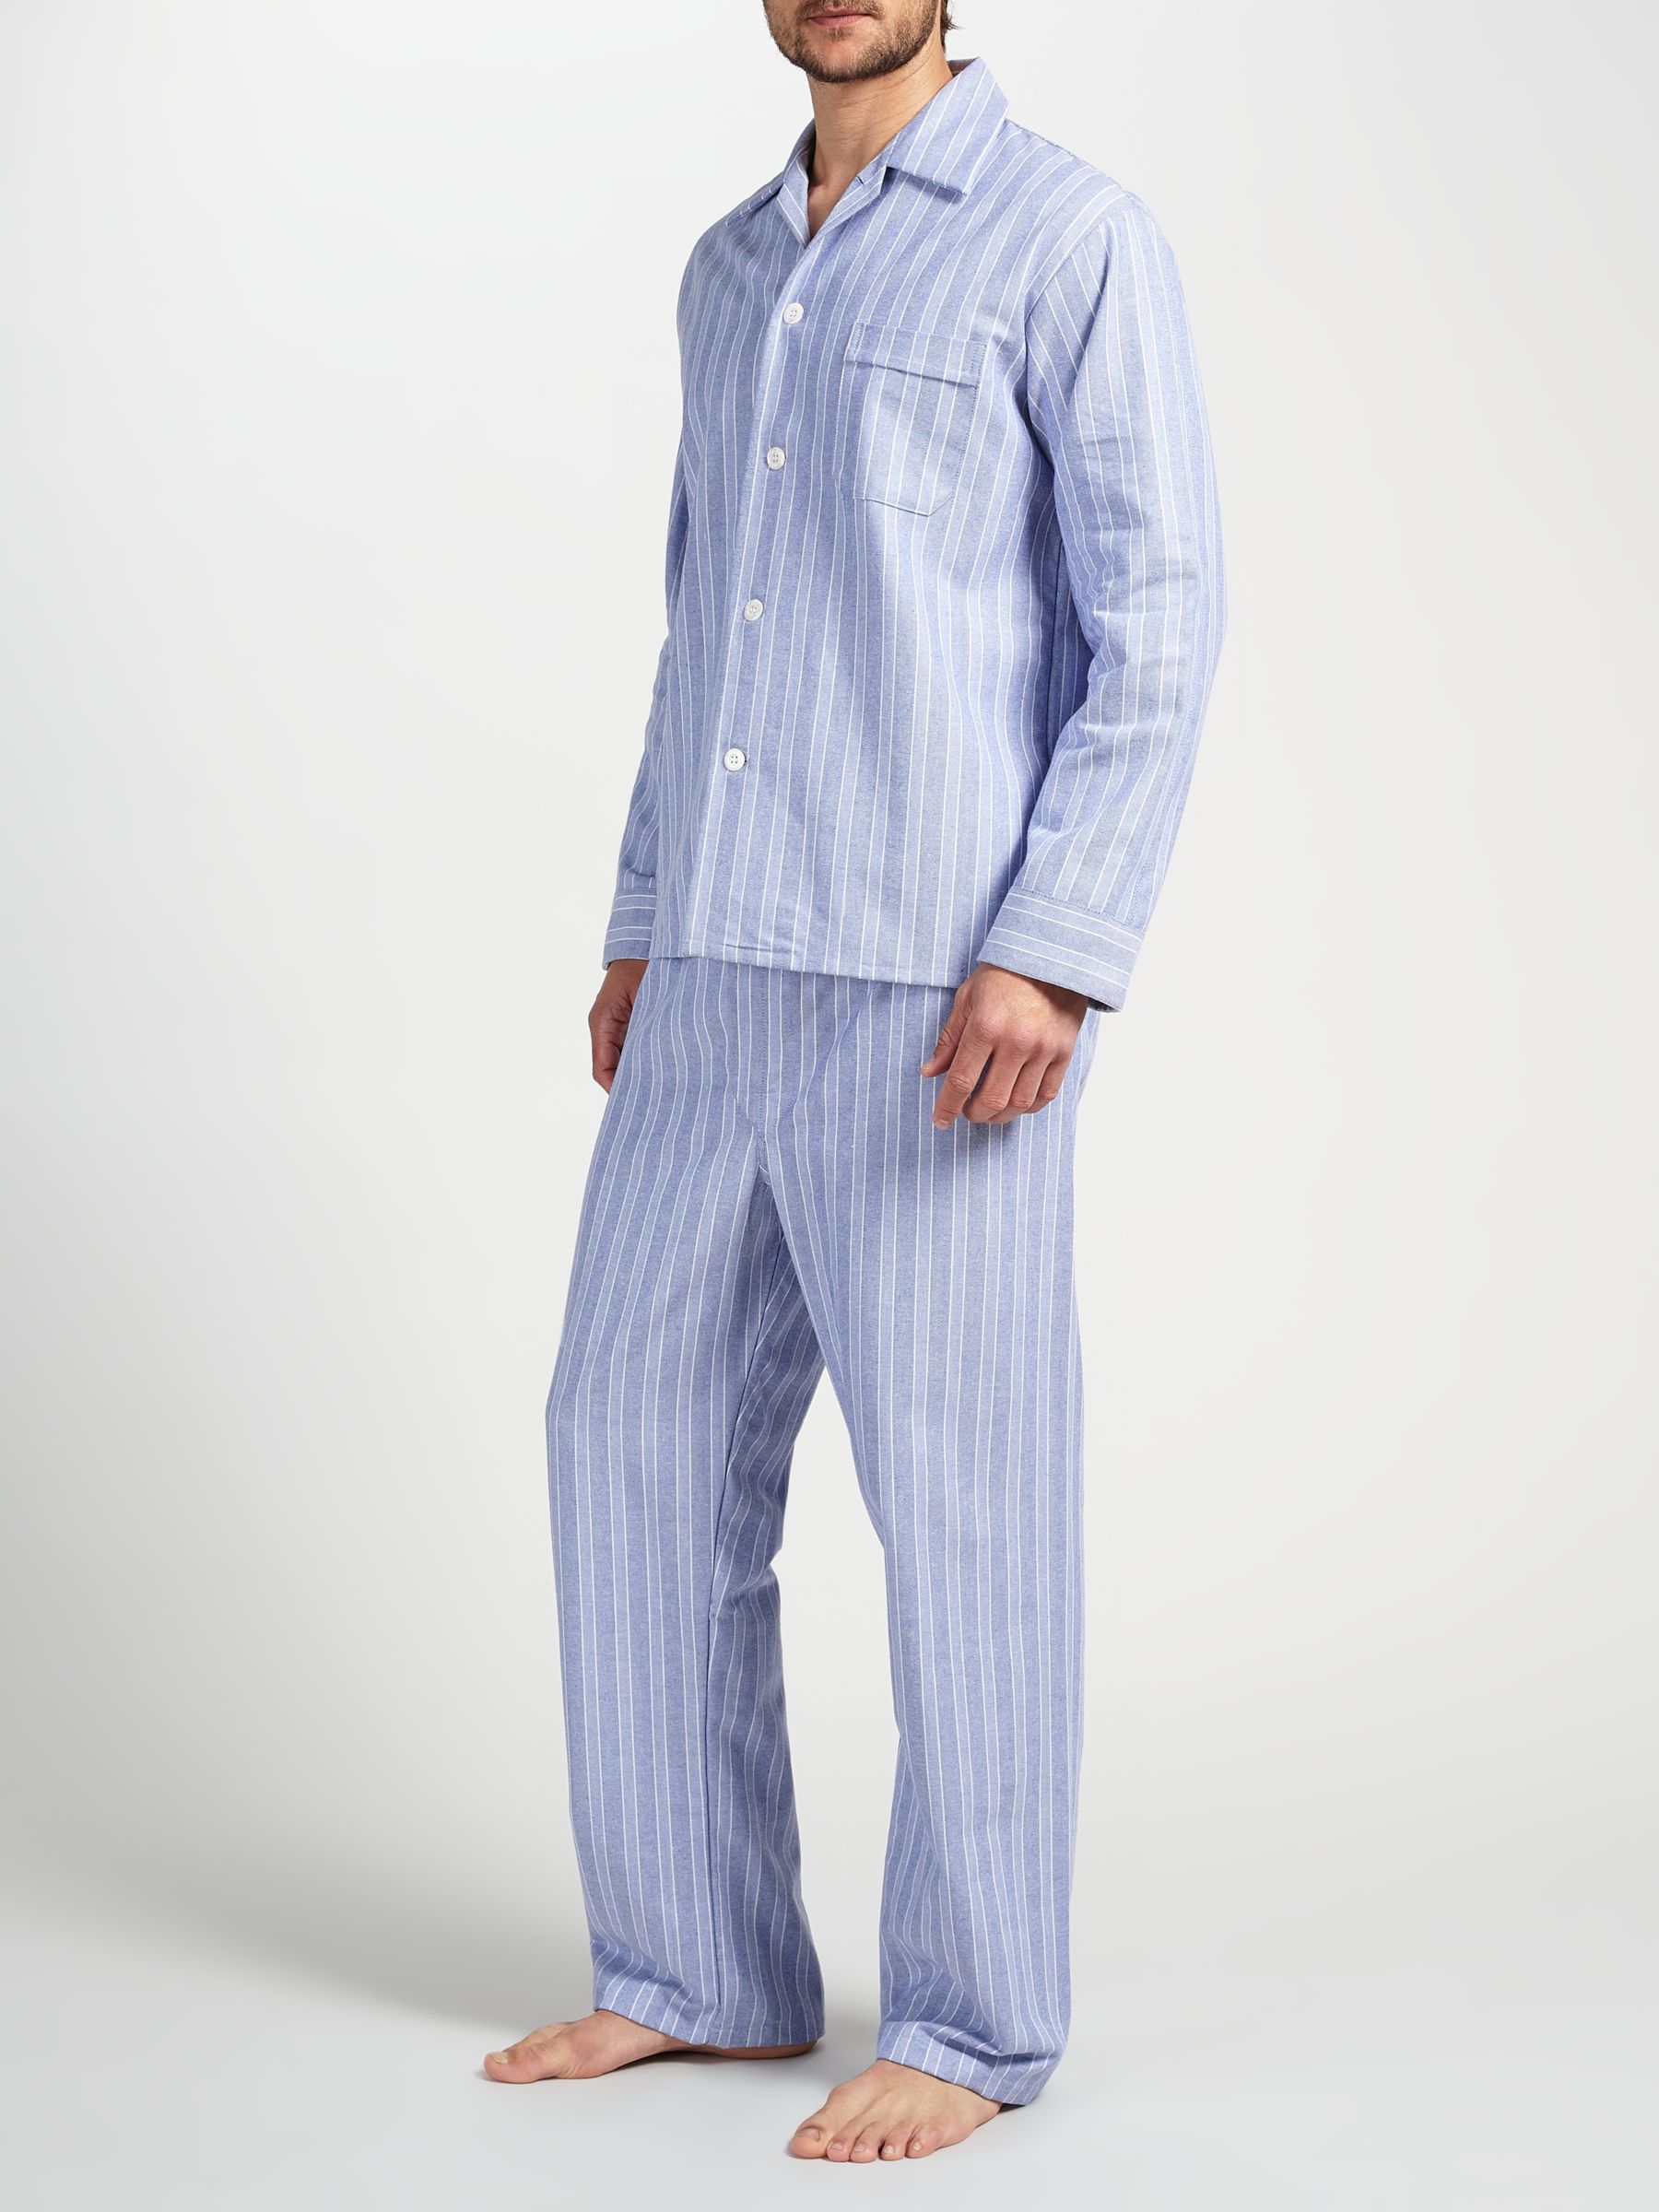 blue and white striped pyjamas womens